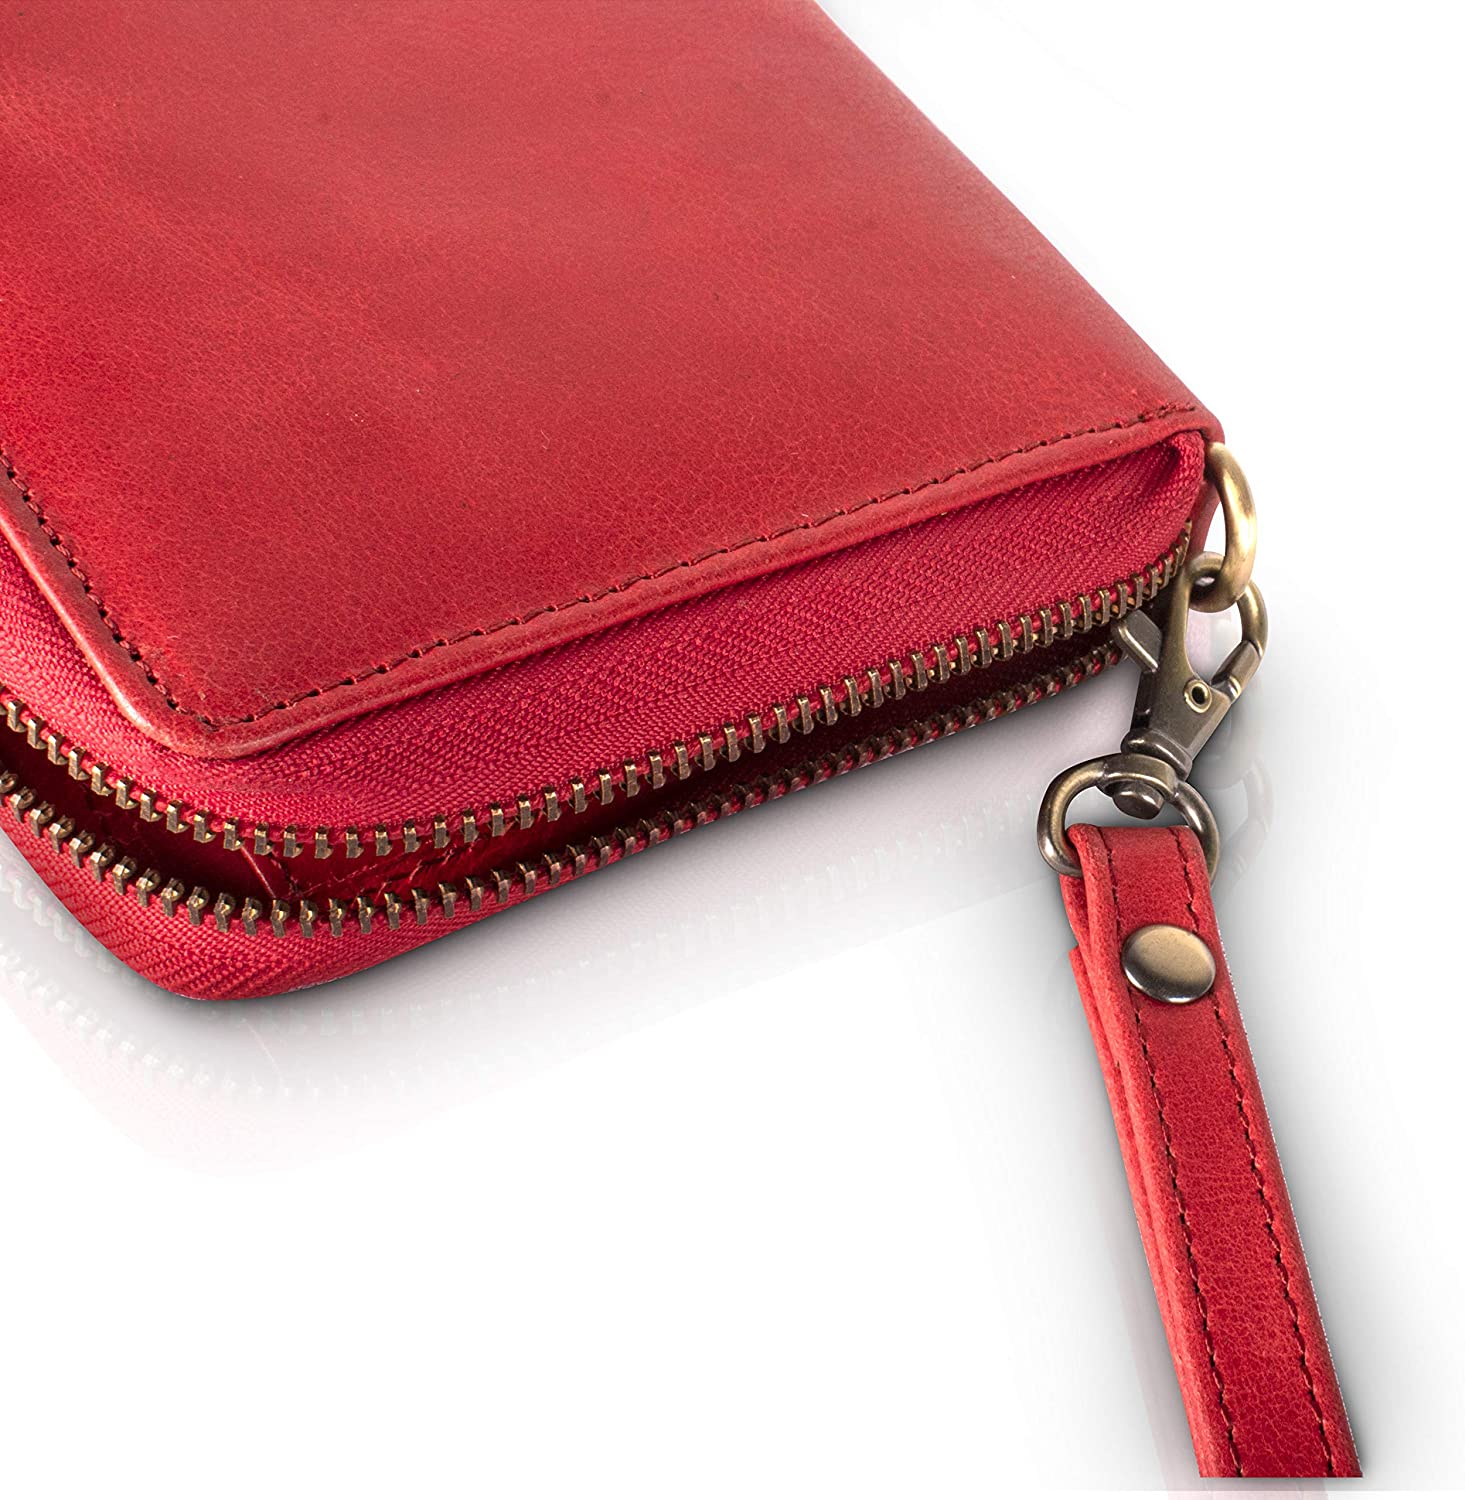 Buy krishna enterprise Women Red Handbag Red Online @ Best Price in India |  Flipkart.com